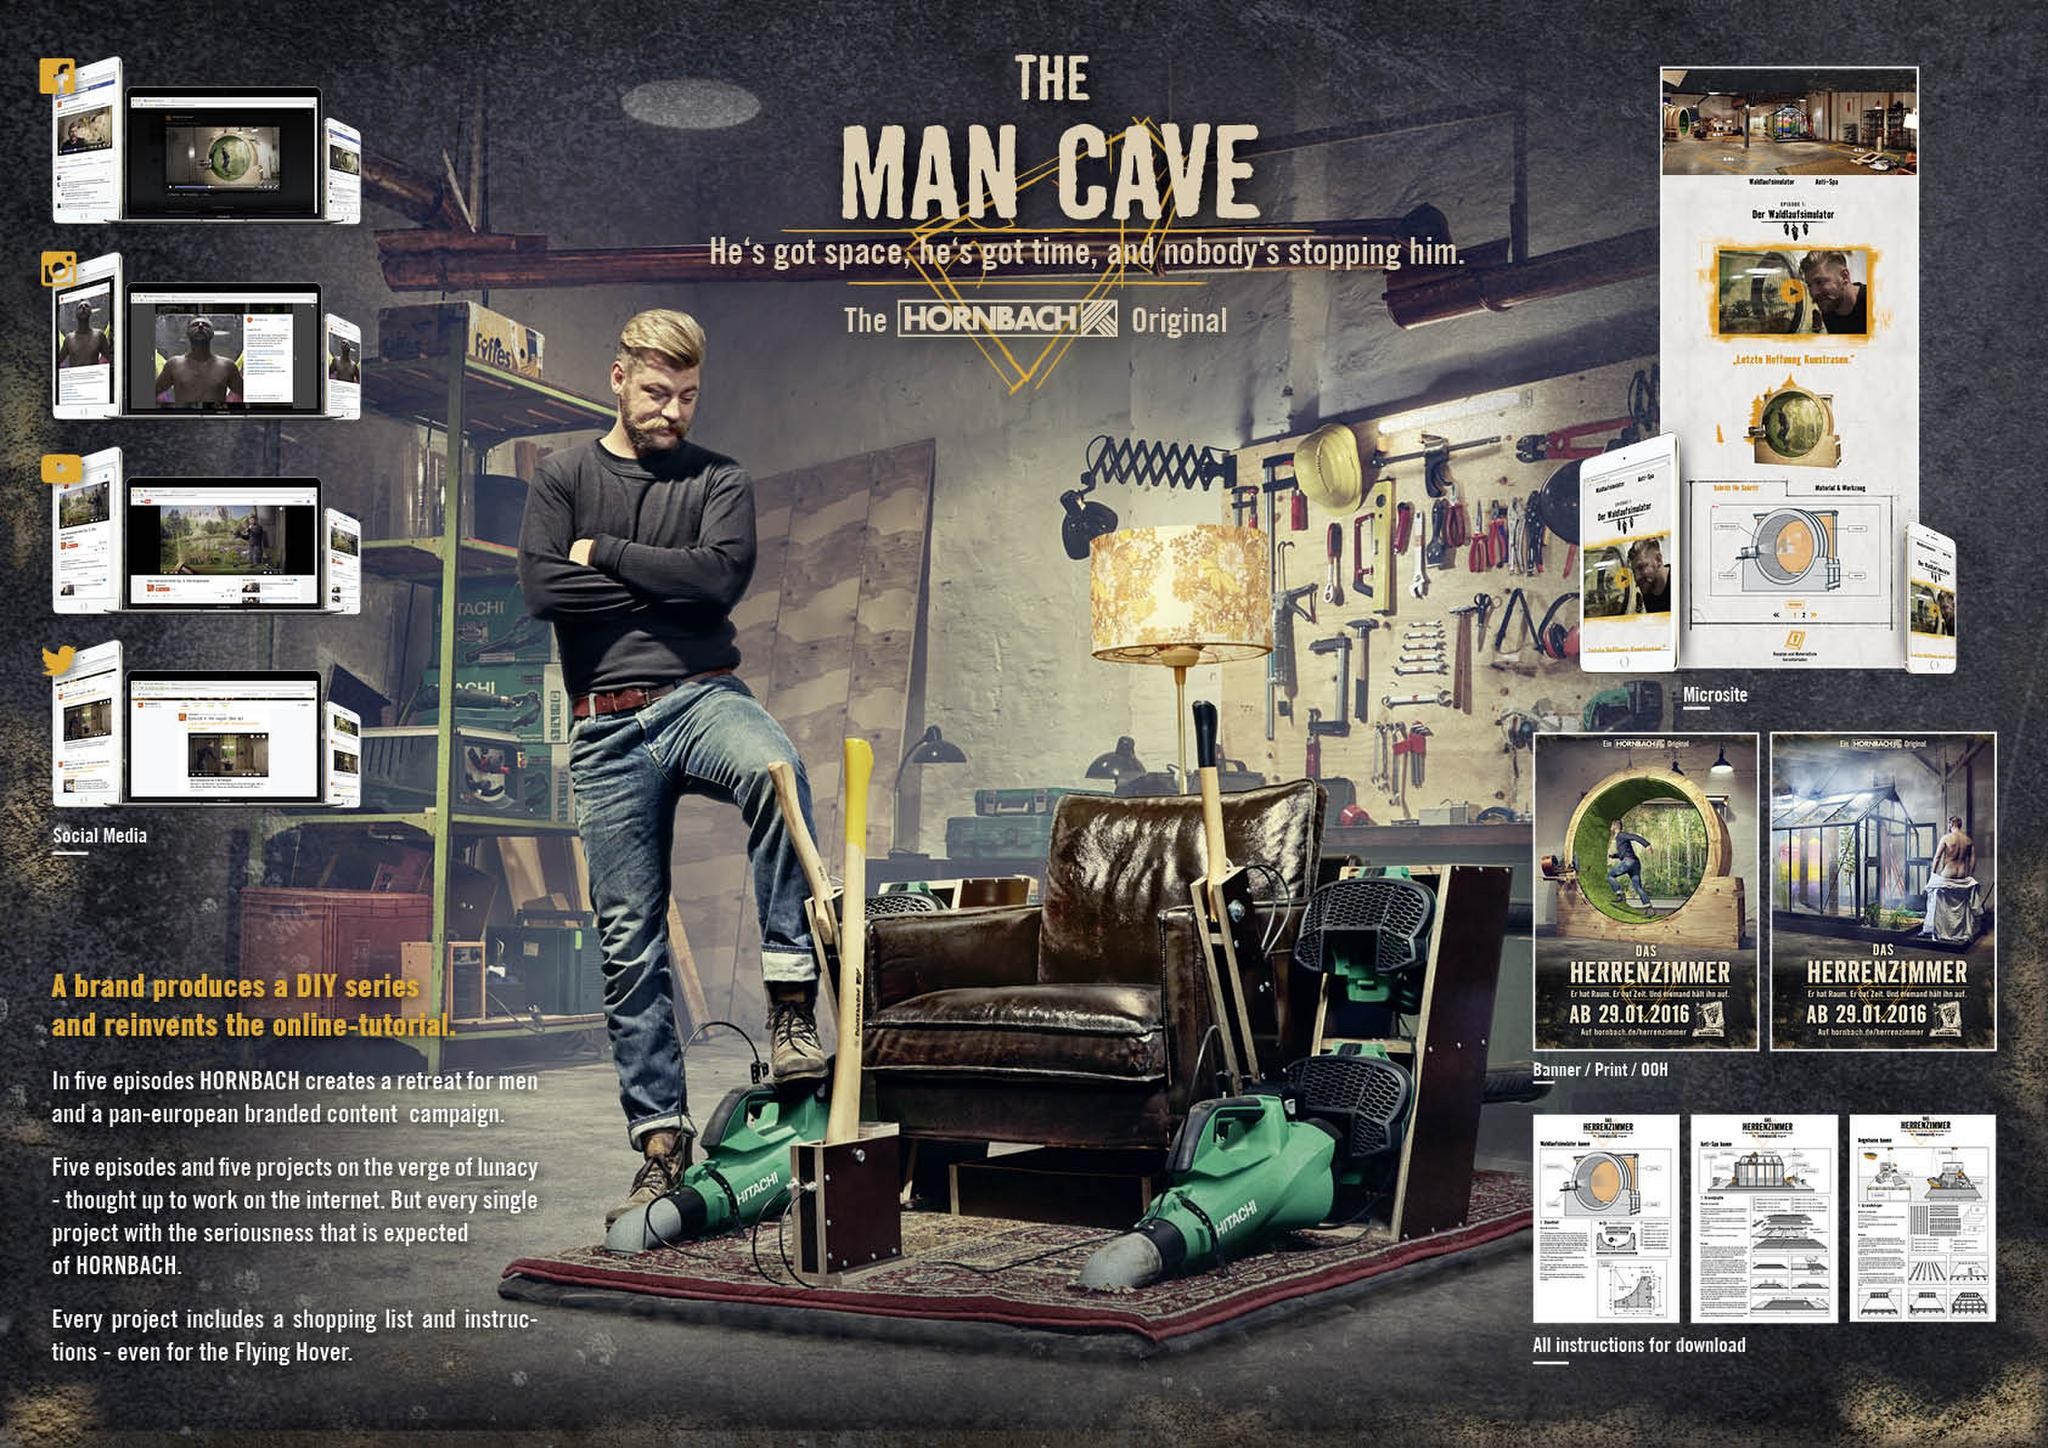 Man Cave - The Beer Creek